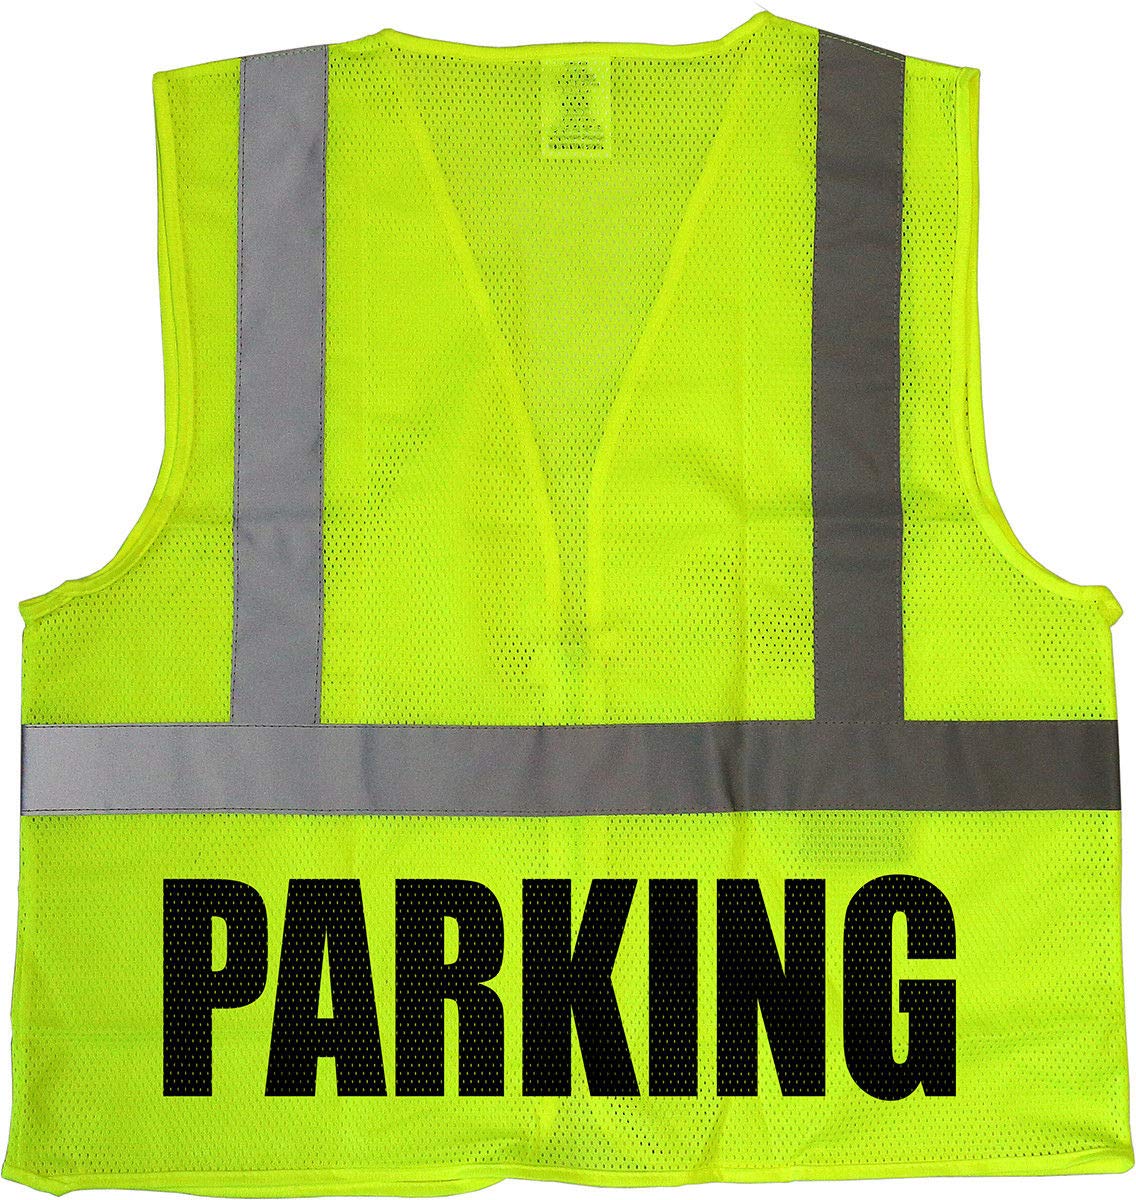 Conspiracy Tee Parking Attendant mesh Vest, Parking Staff Vest, Safety, Valet, Event Parking